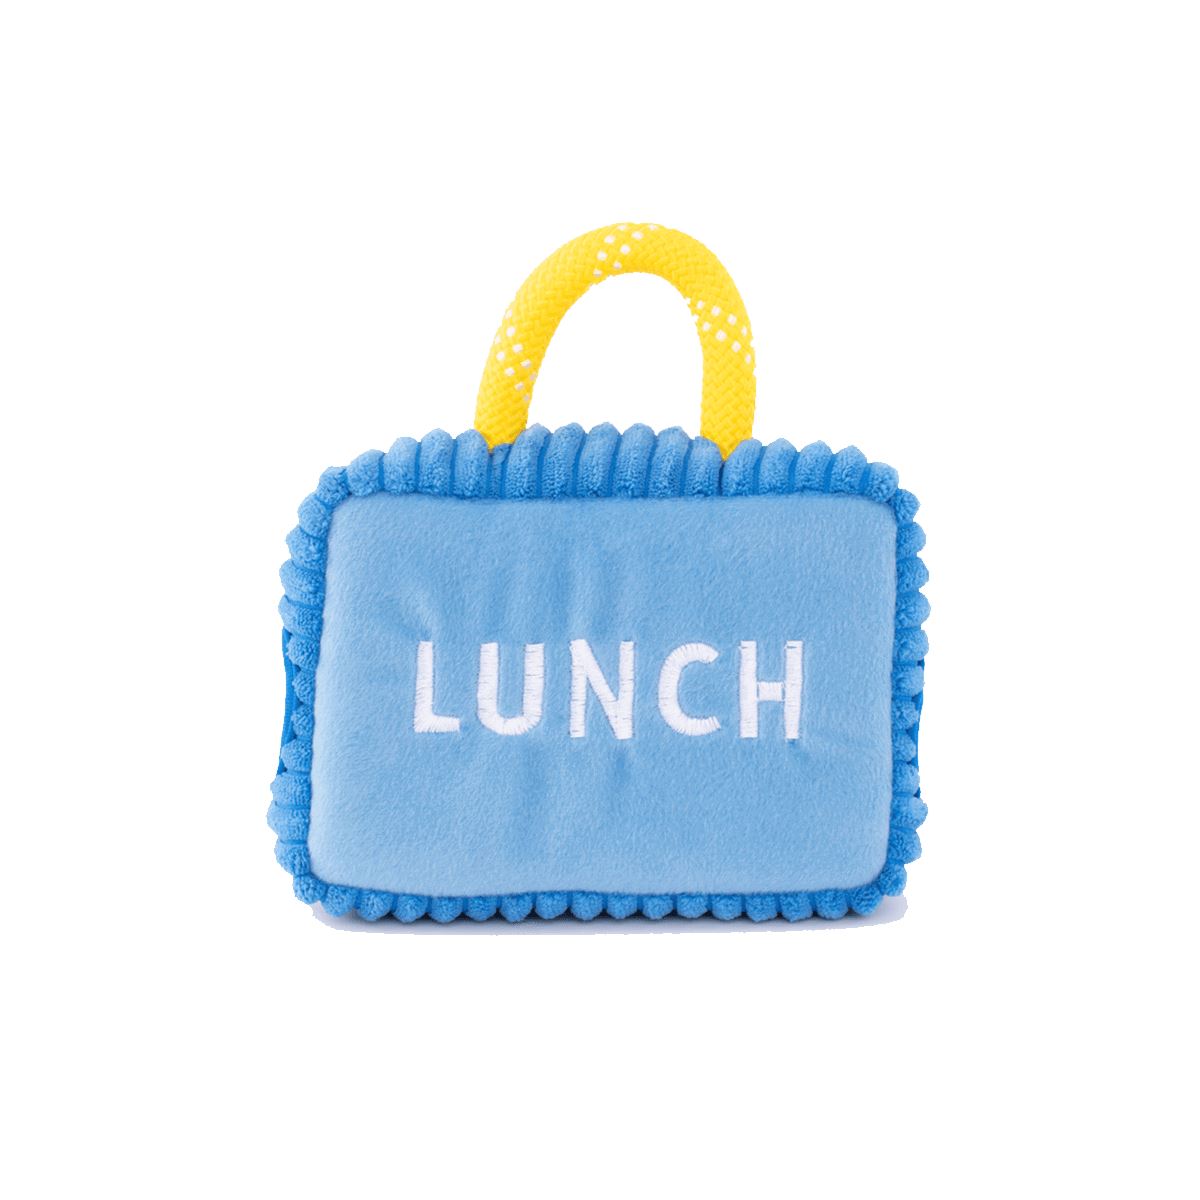 Lunchbox Burrow Dog Toy | Pawlicious & Company